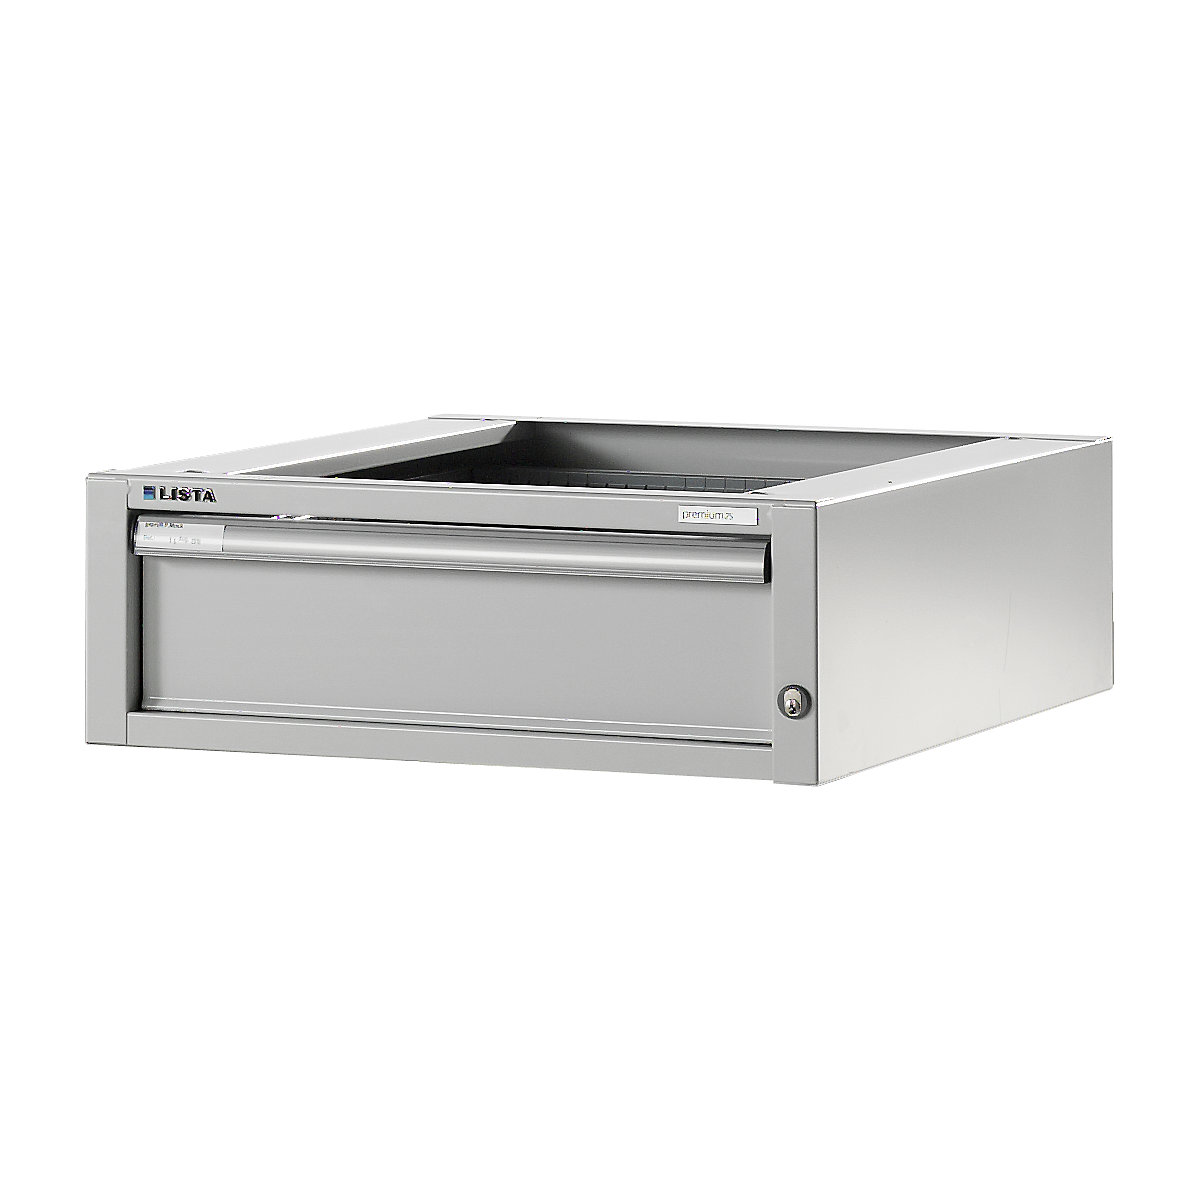 Modular workbench system, drawer unit – LISTA, height 204 mm, 1 drawer, light grey-6